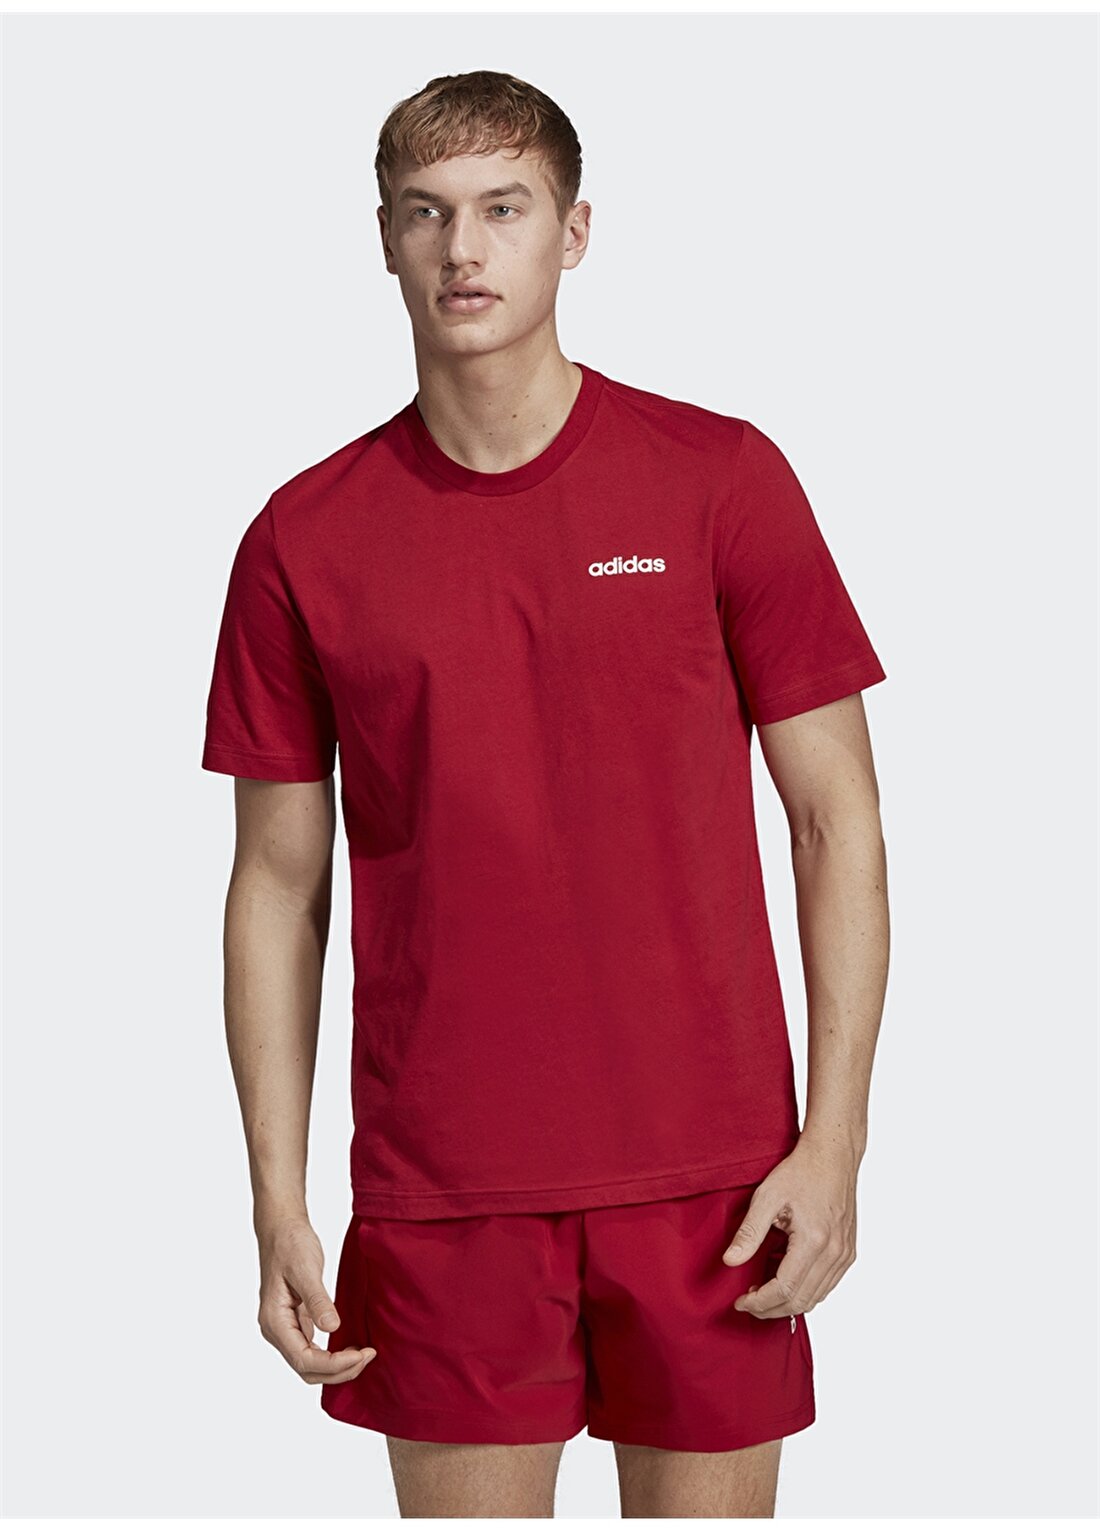 Adidas EI9780 Essentials Plain T-Shirt